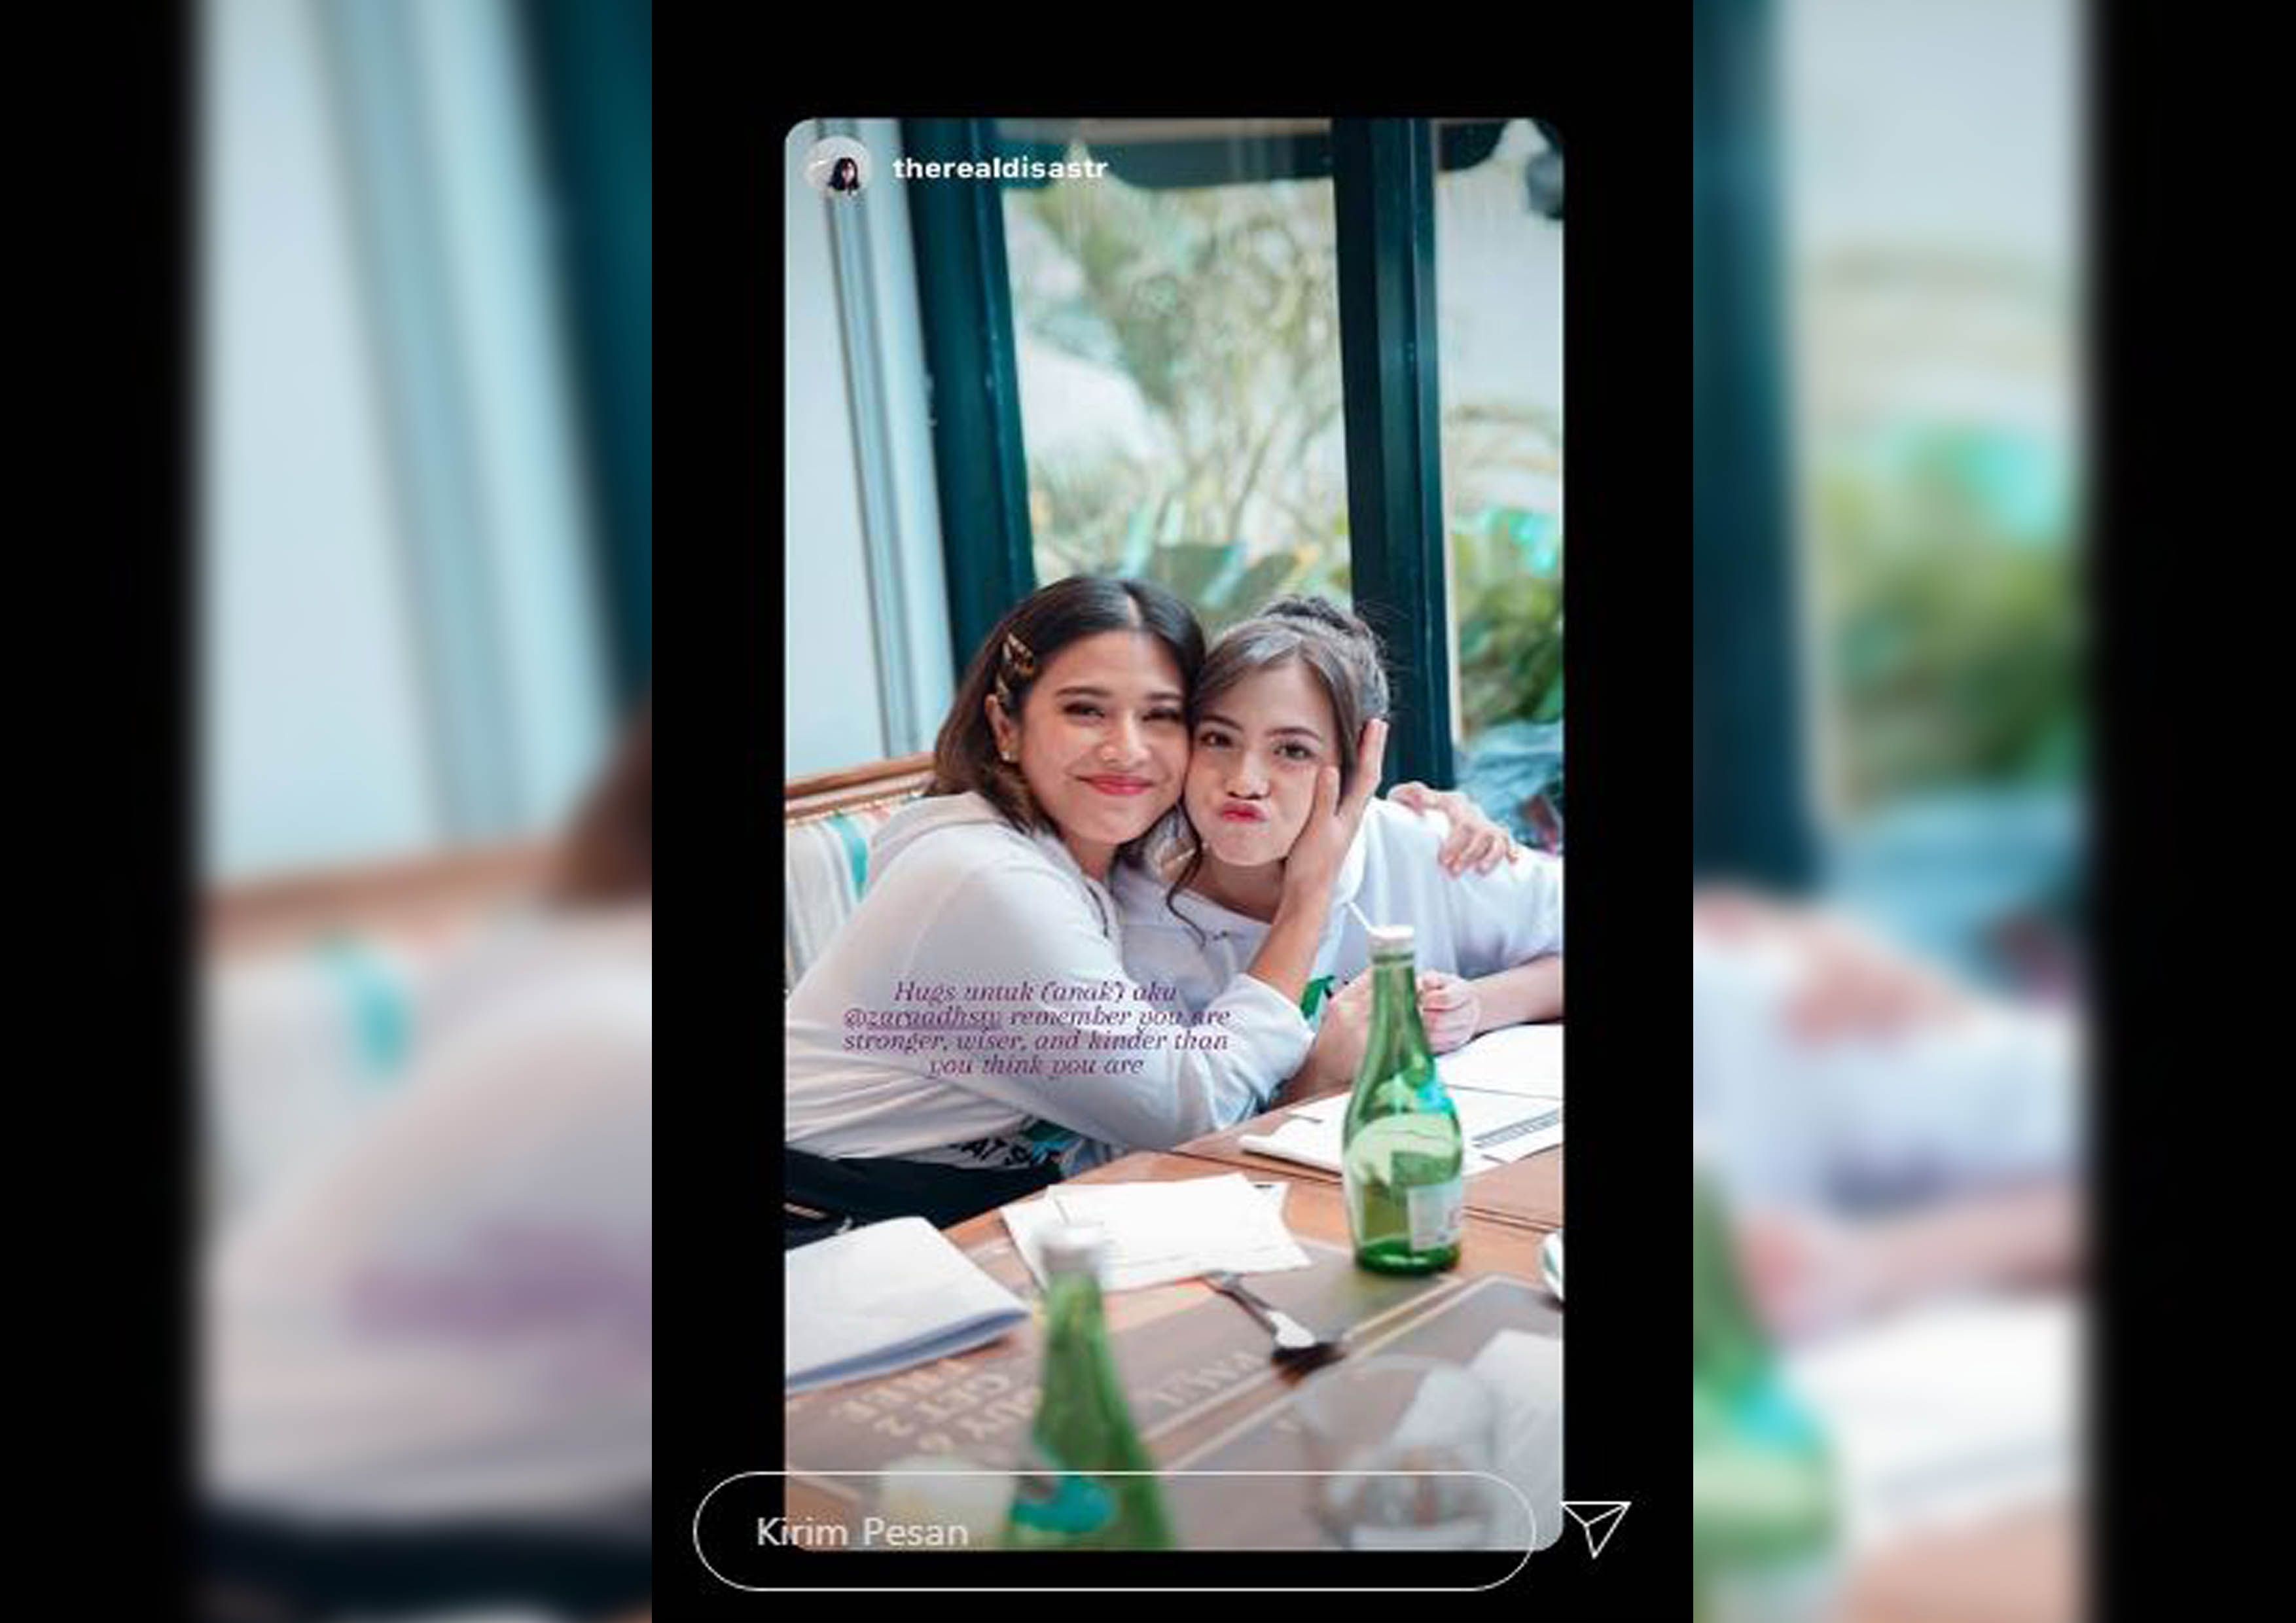 Dian Sastro memberikan dukungan kepada Adhisty Zara melalui Instagram story yang diunggah pada Jumat, 28 Agustus 2020.